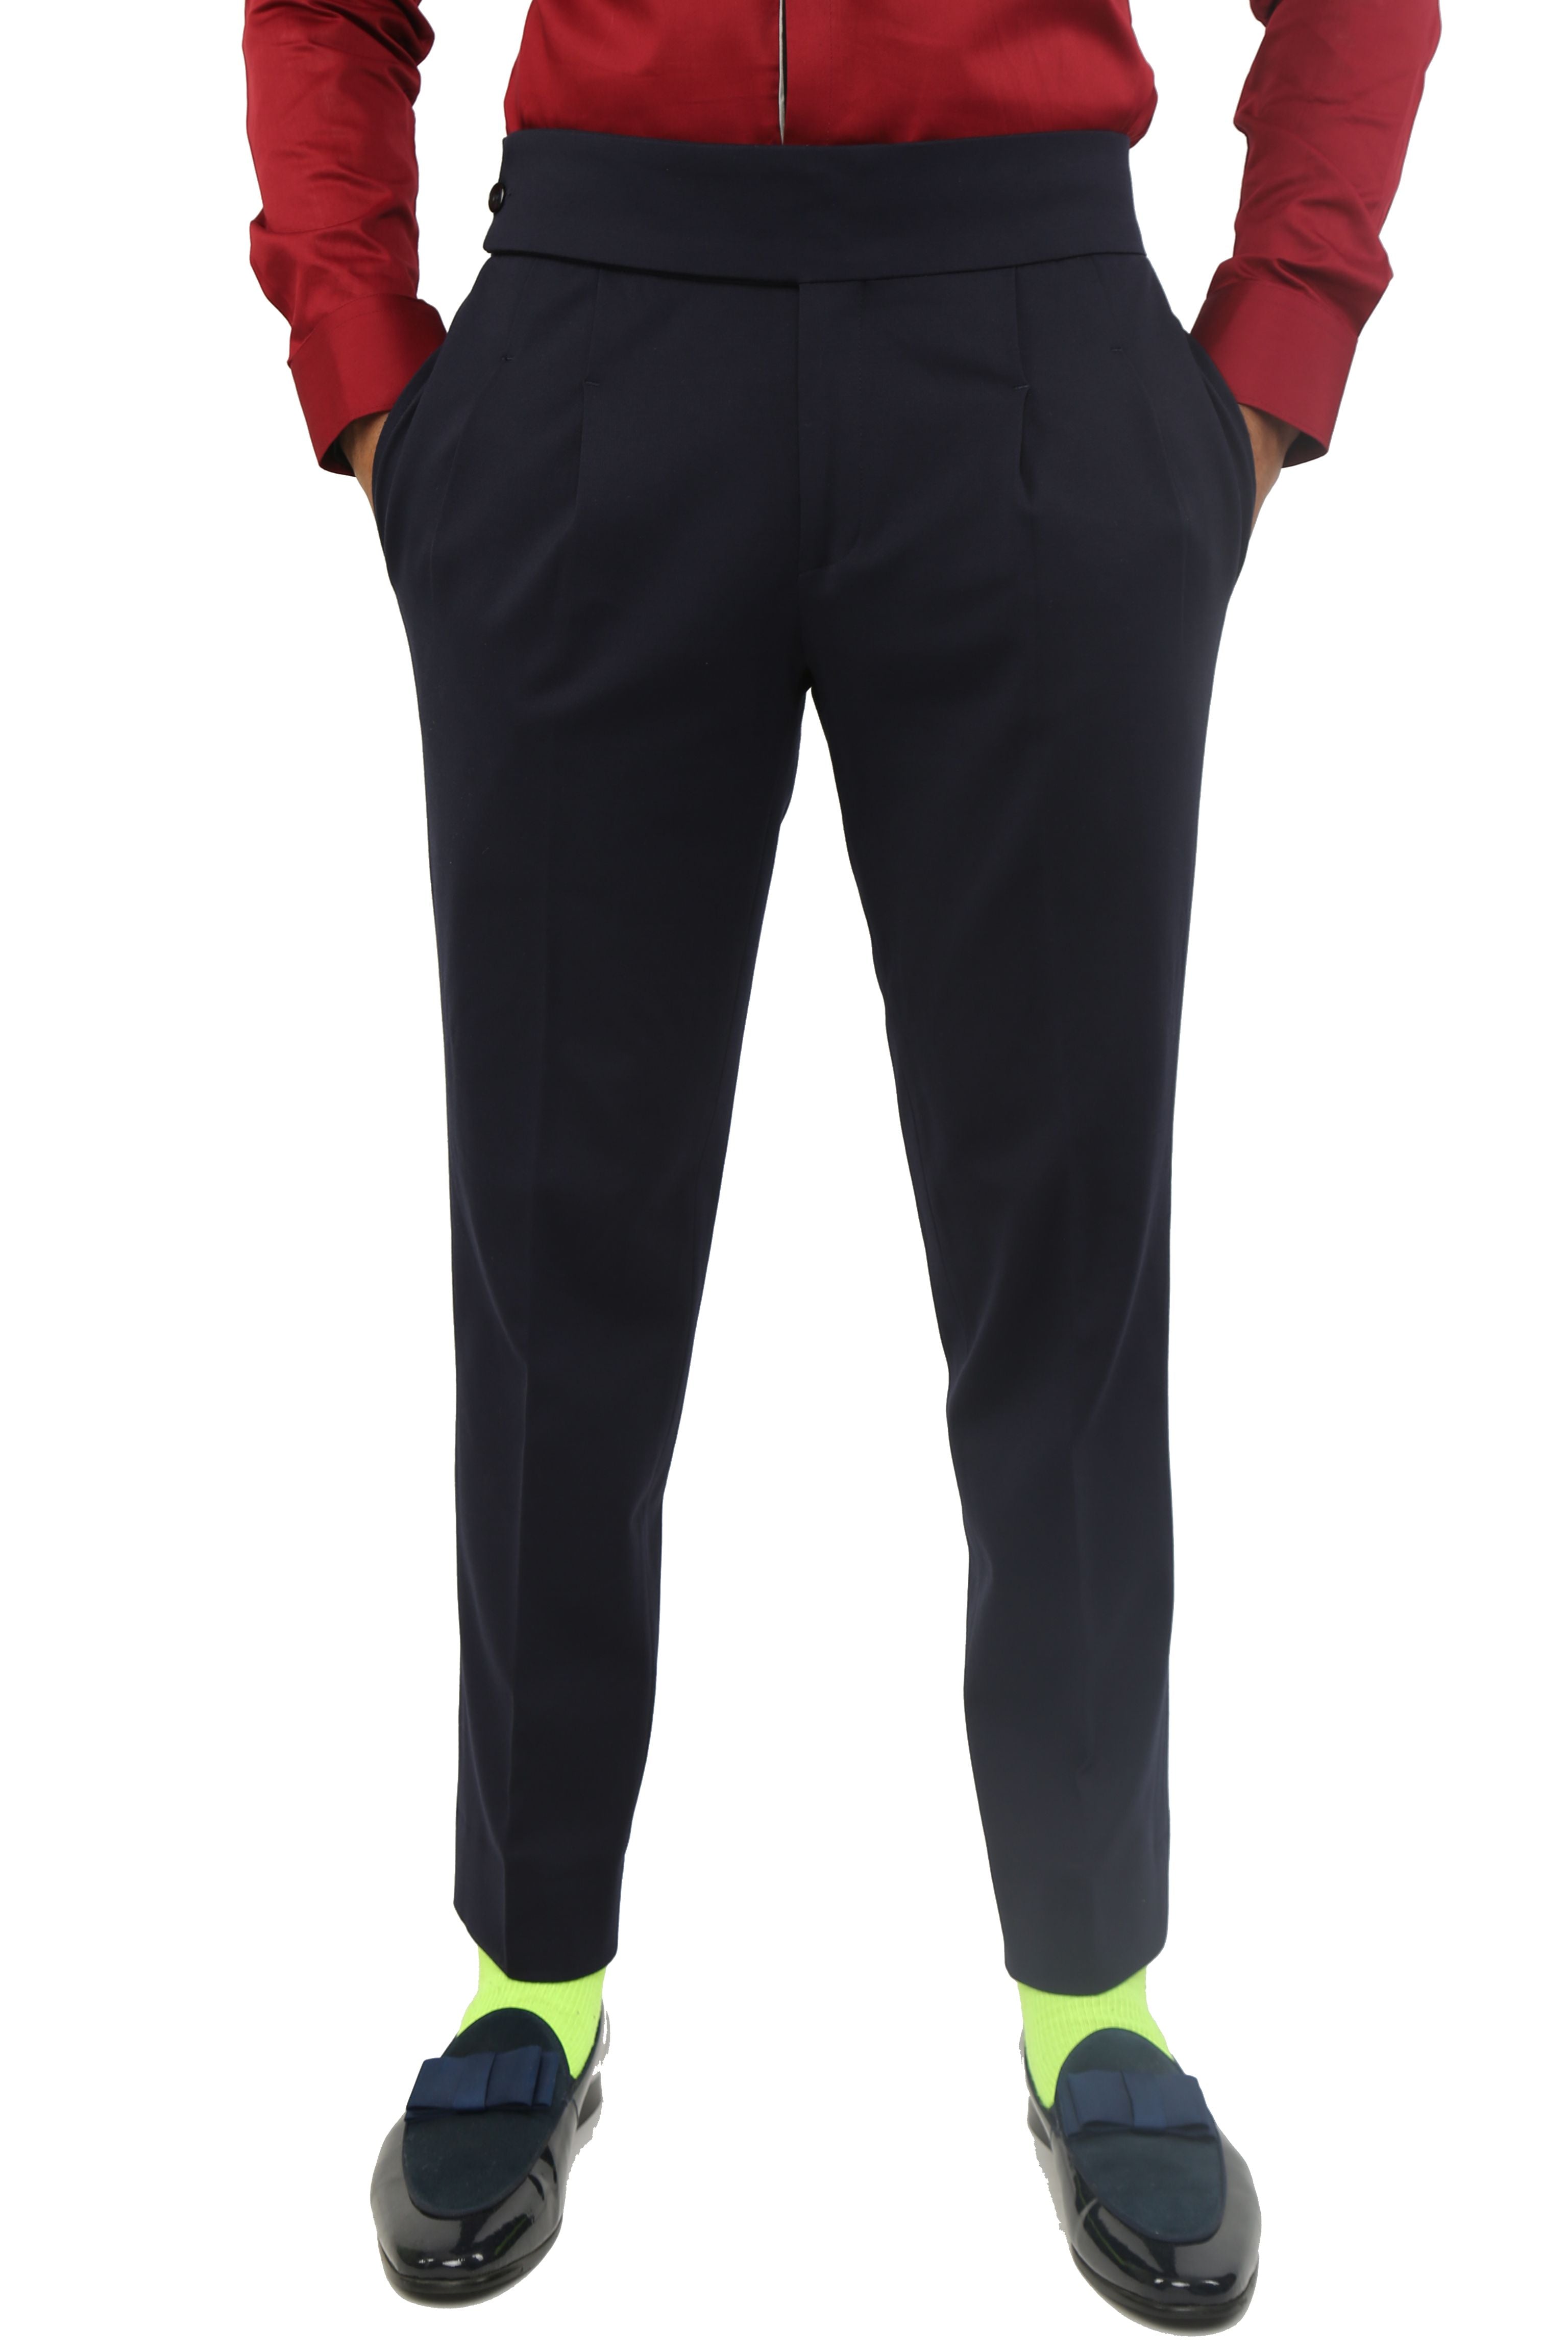 Black Pants  Beltless Pant Design  100 Polyester  Side Pocket Ple   Ascott Browne